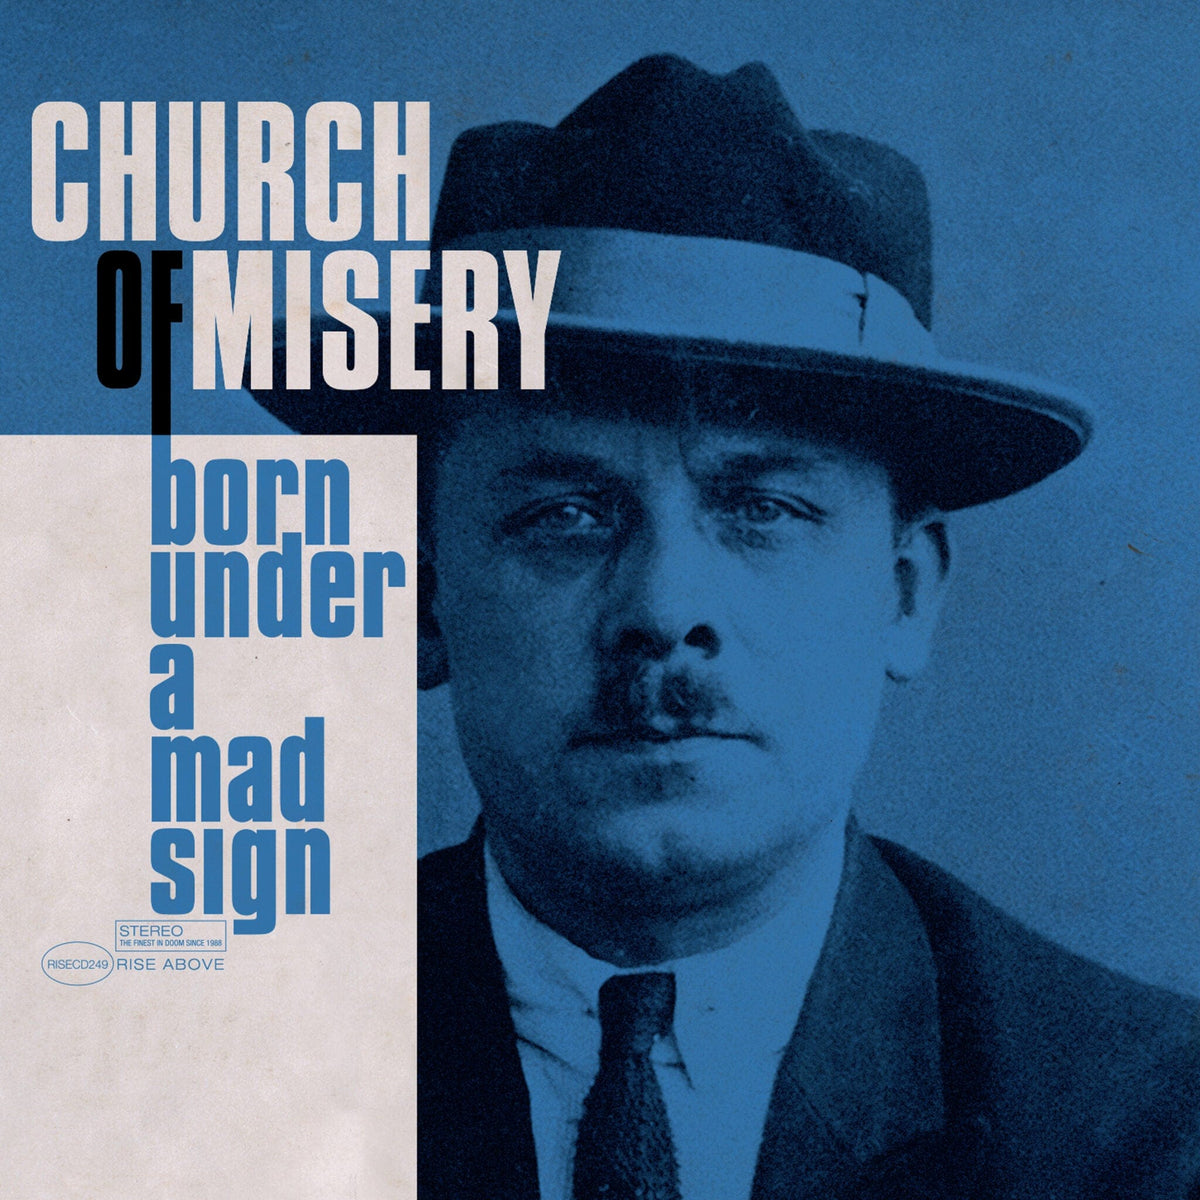 Church of Misery - Born Under a Mad Sign (Purple Vinyl)